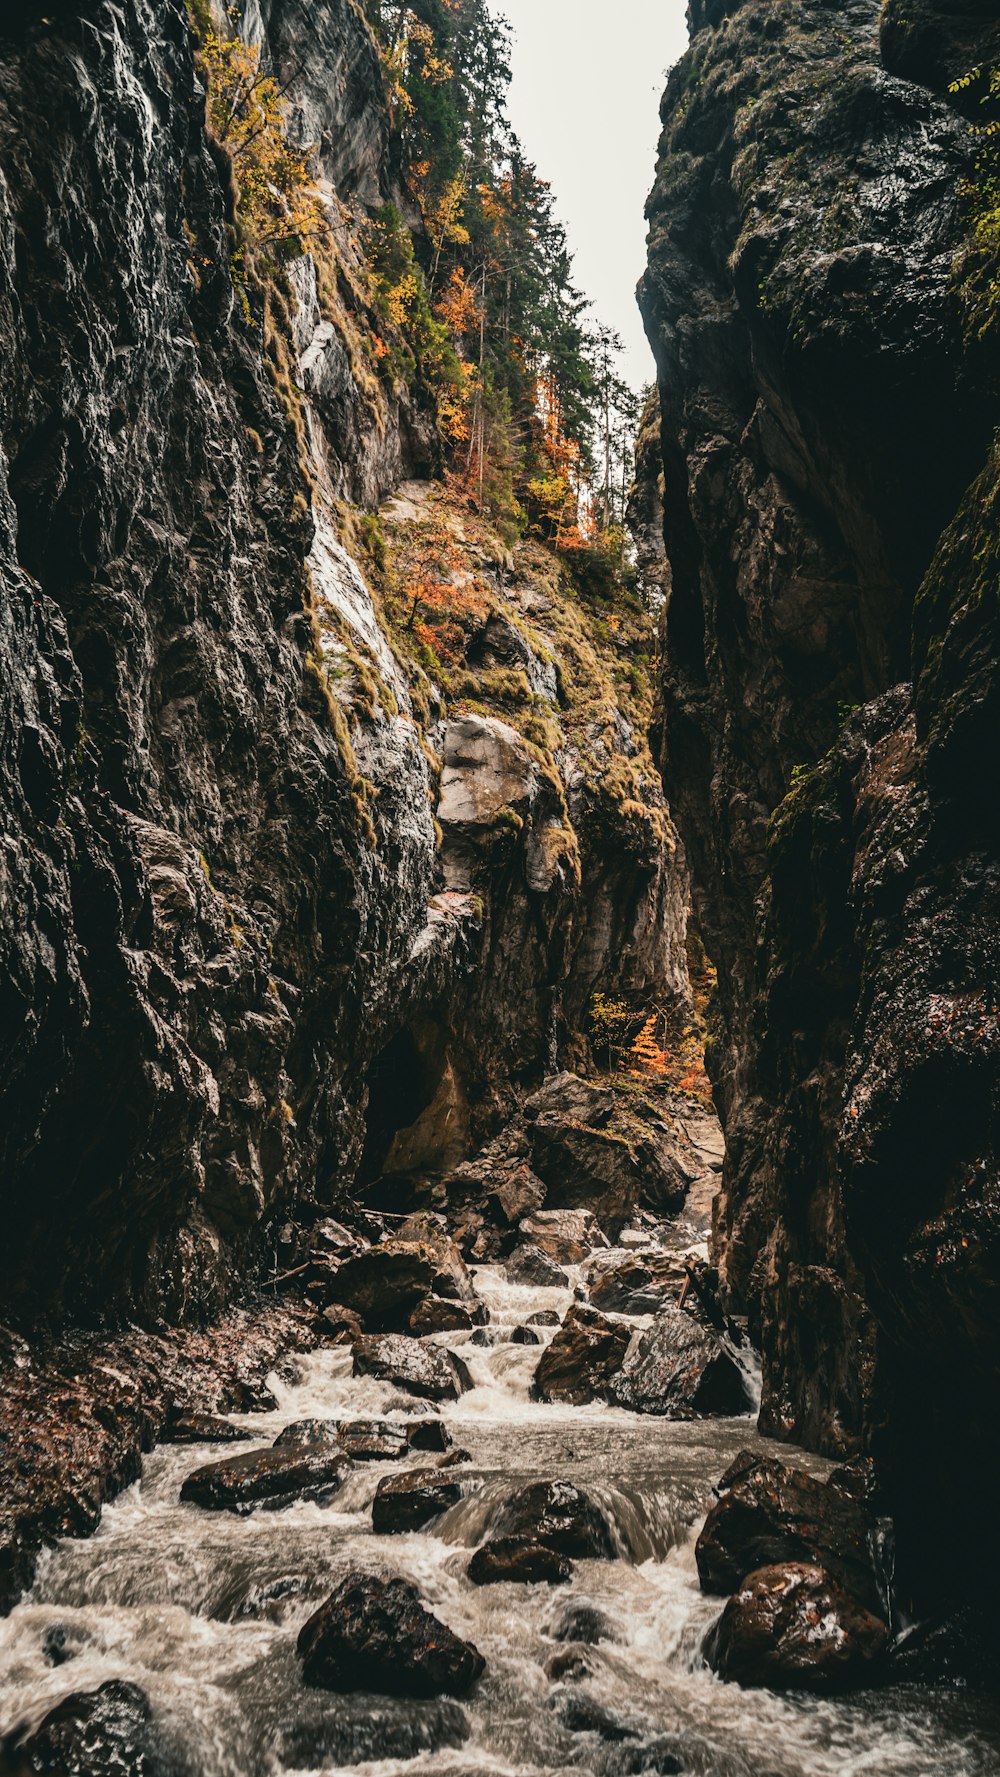 Un río que corre a través de un cañón rocoso junto a un bosque